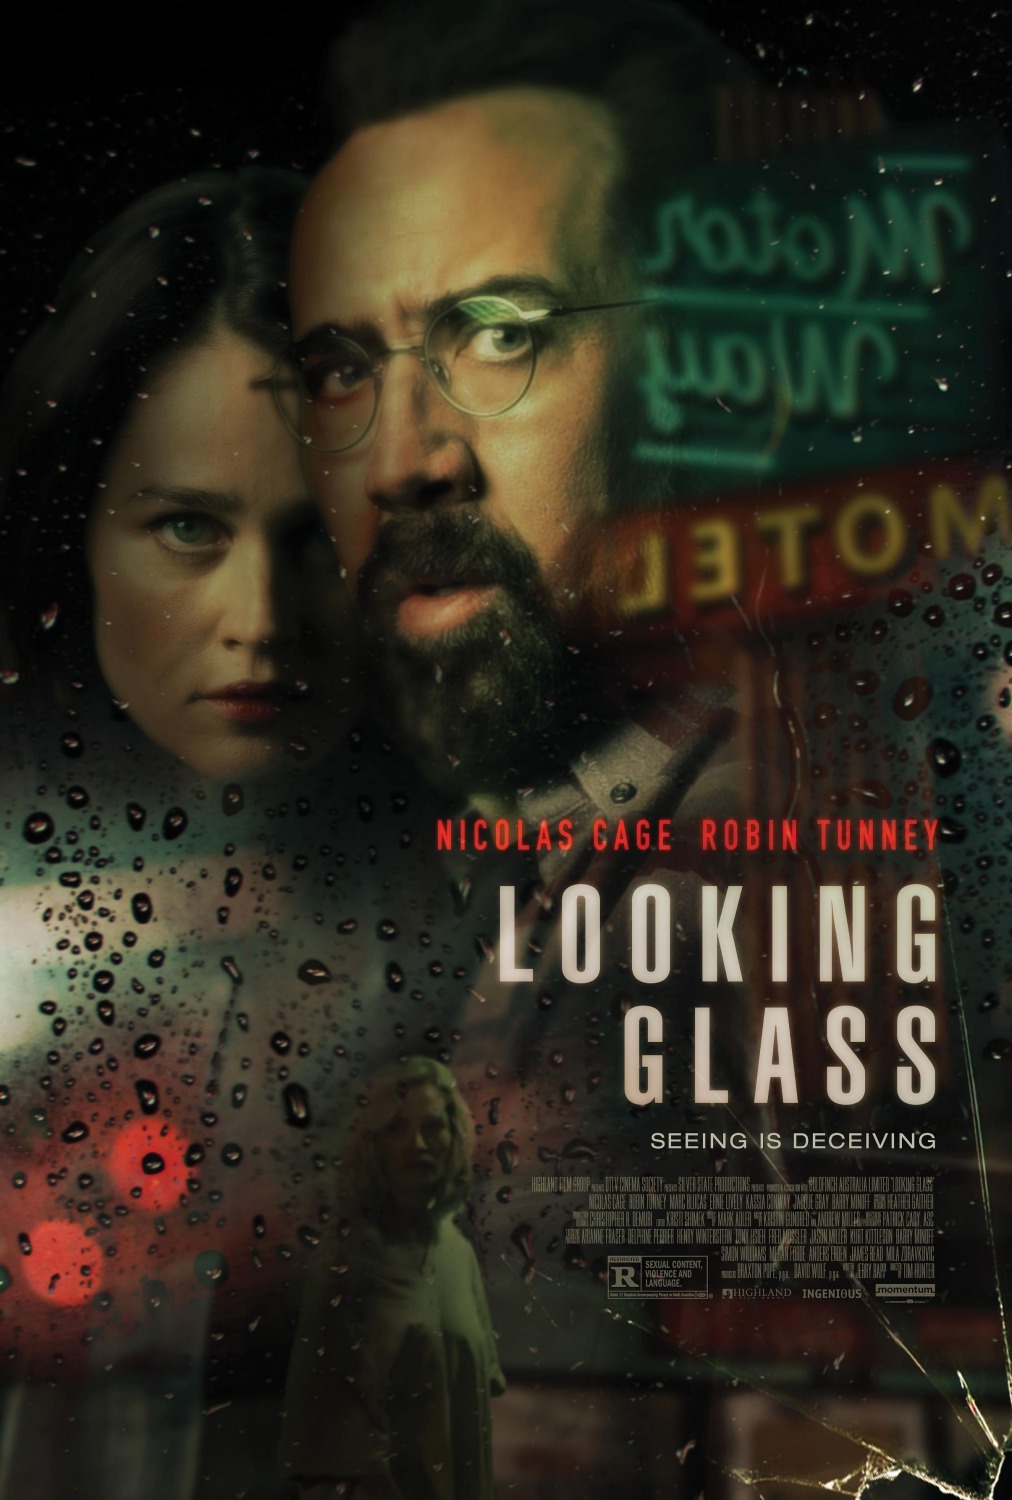 Nonton film Looking Glass layarkaca21 indoxx1 ganool online streaming terbaru